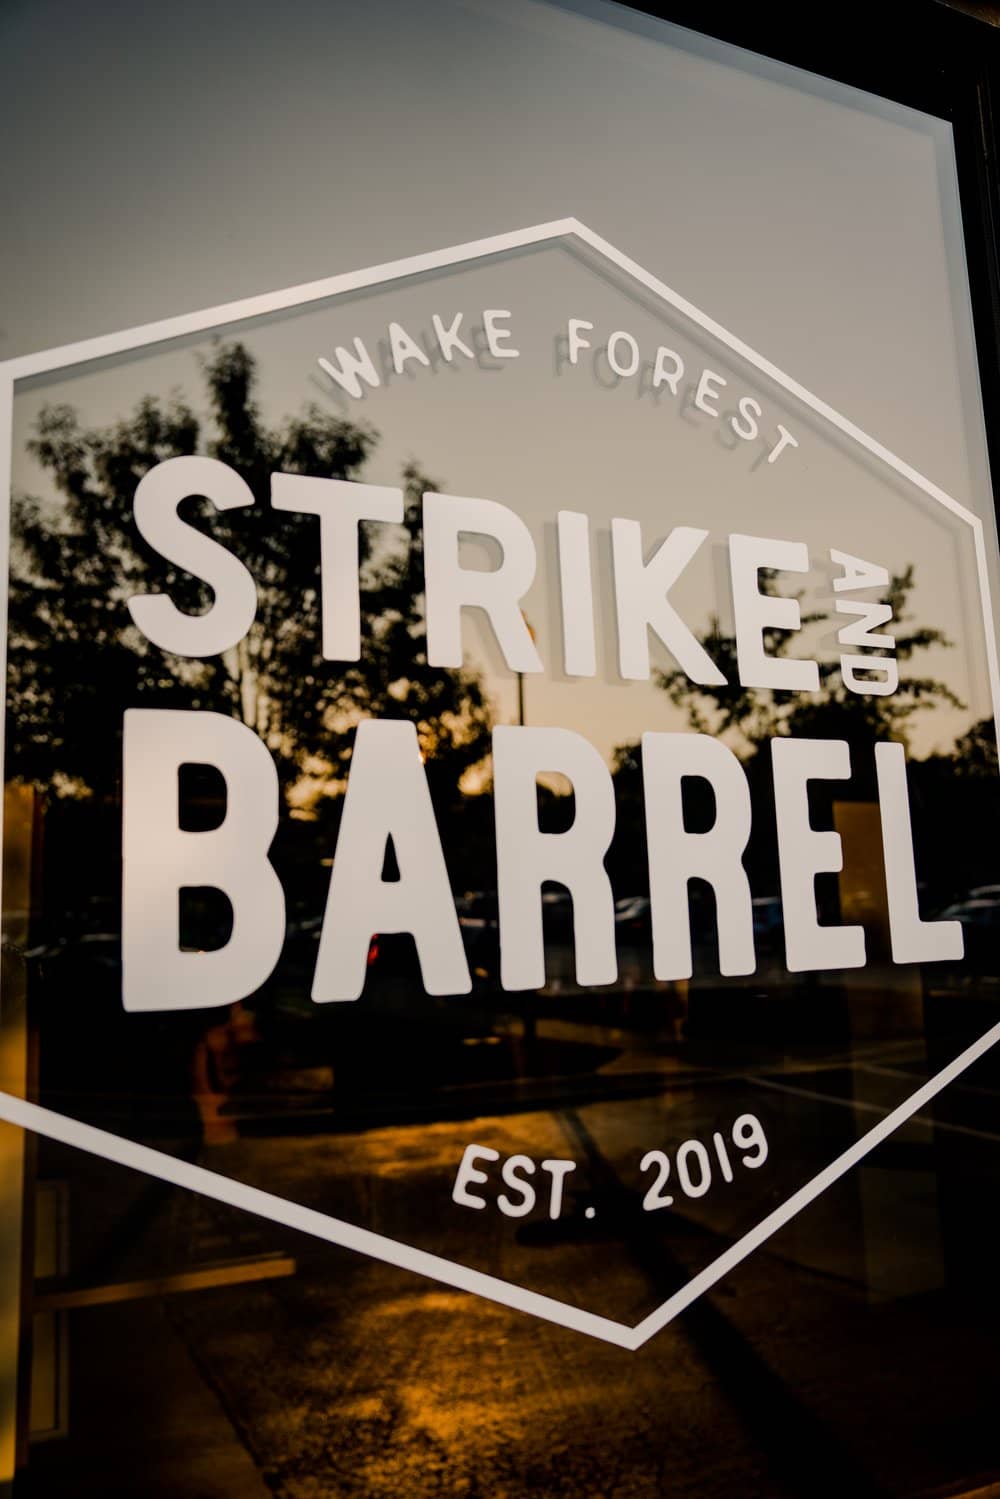 Strike and Barrel